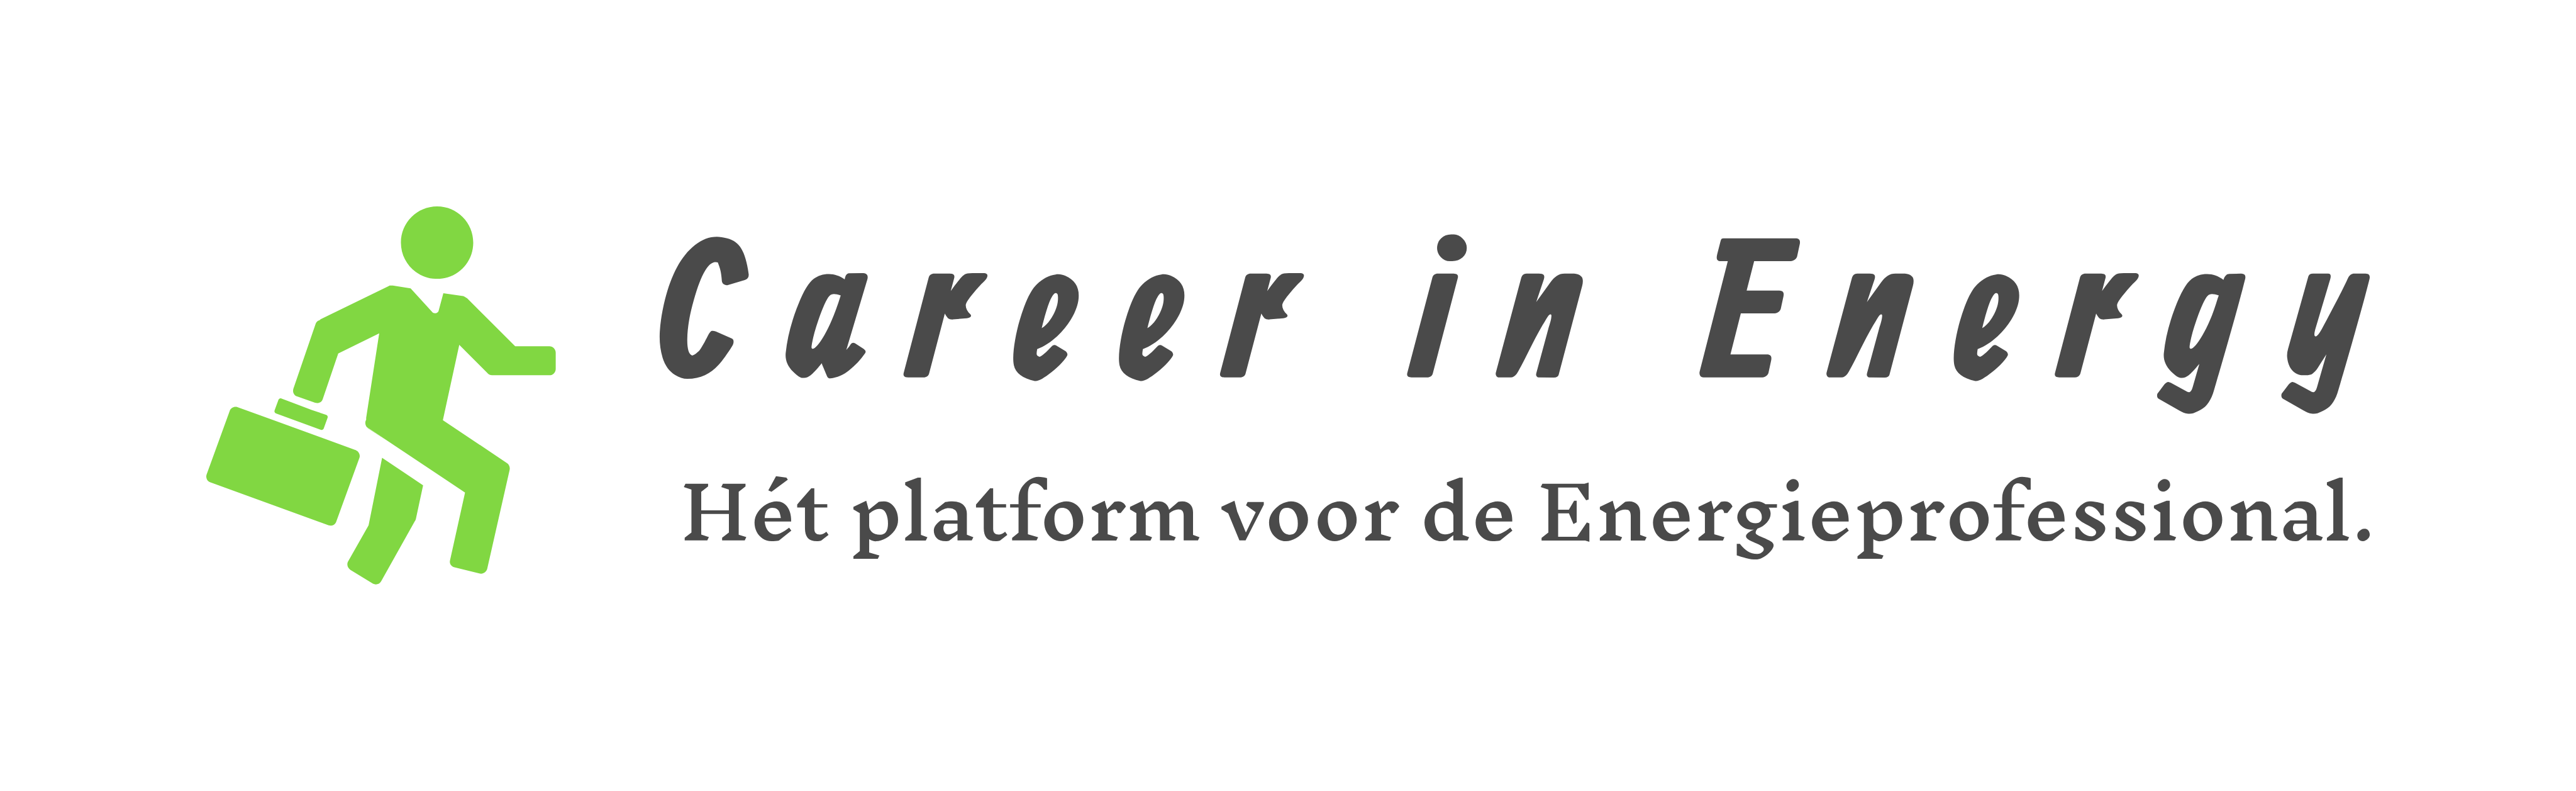 Career in Energy - logo